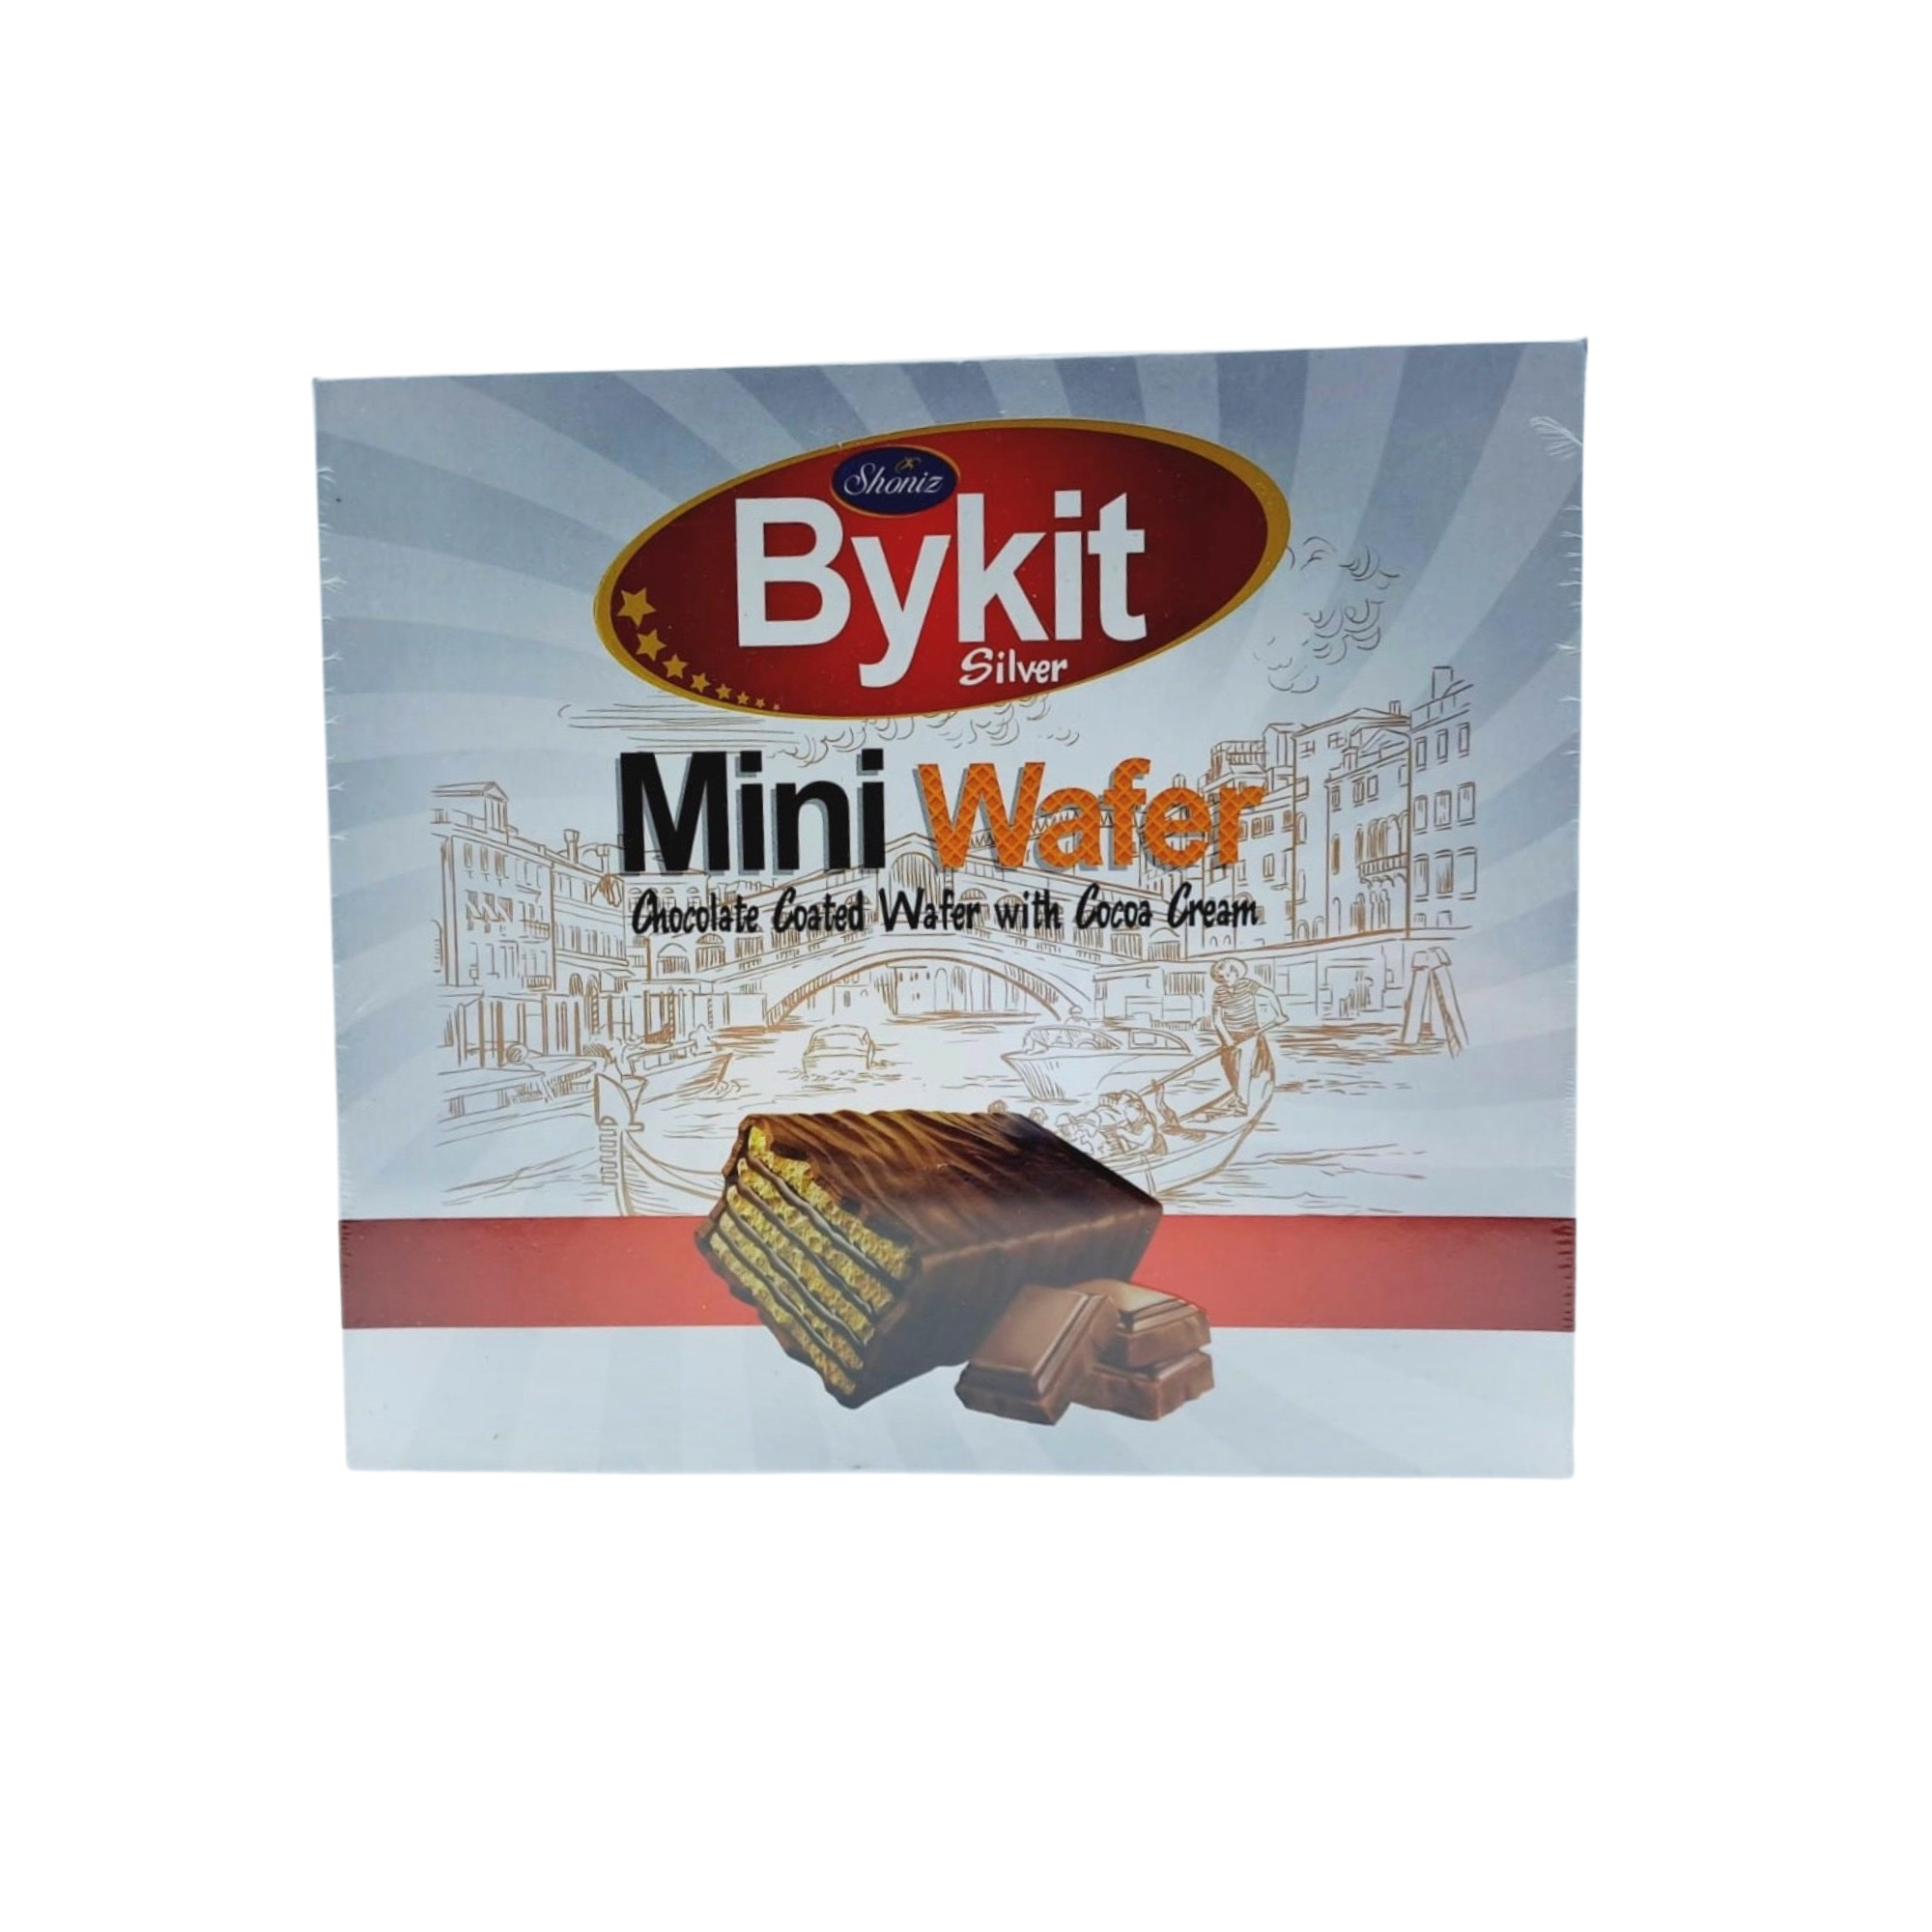 Shoniz Bykit Silver Mini Wafer with Dark Cocoa Cream 500g